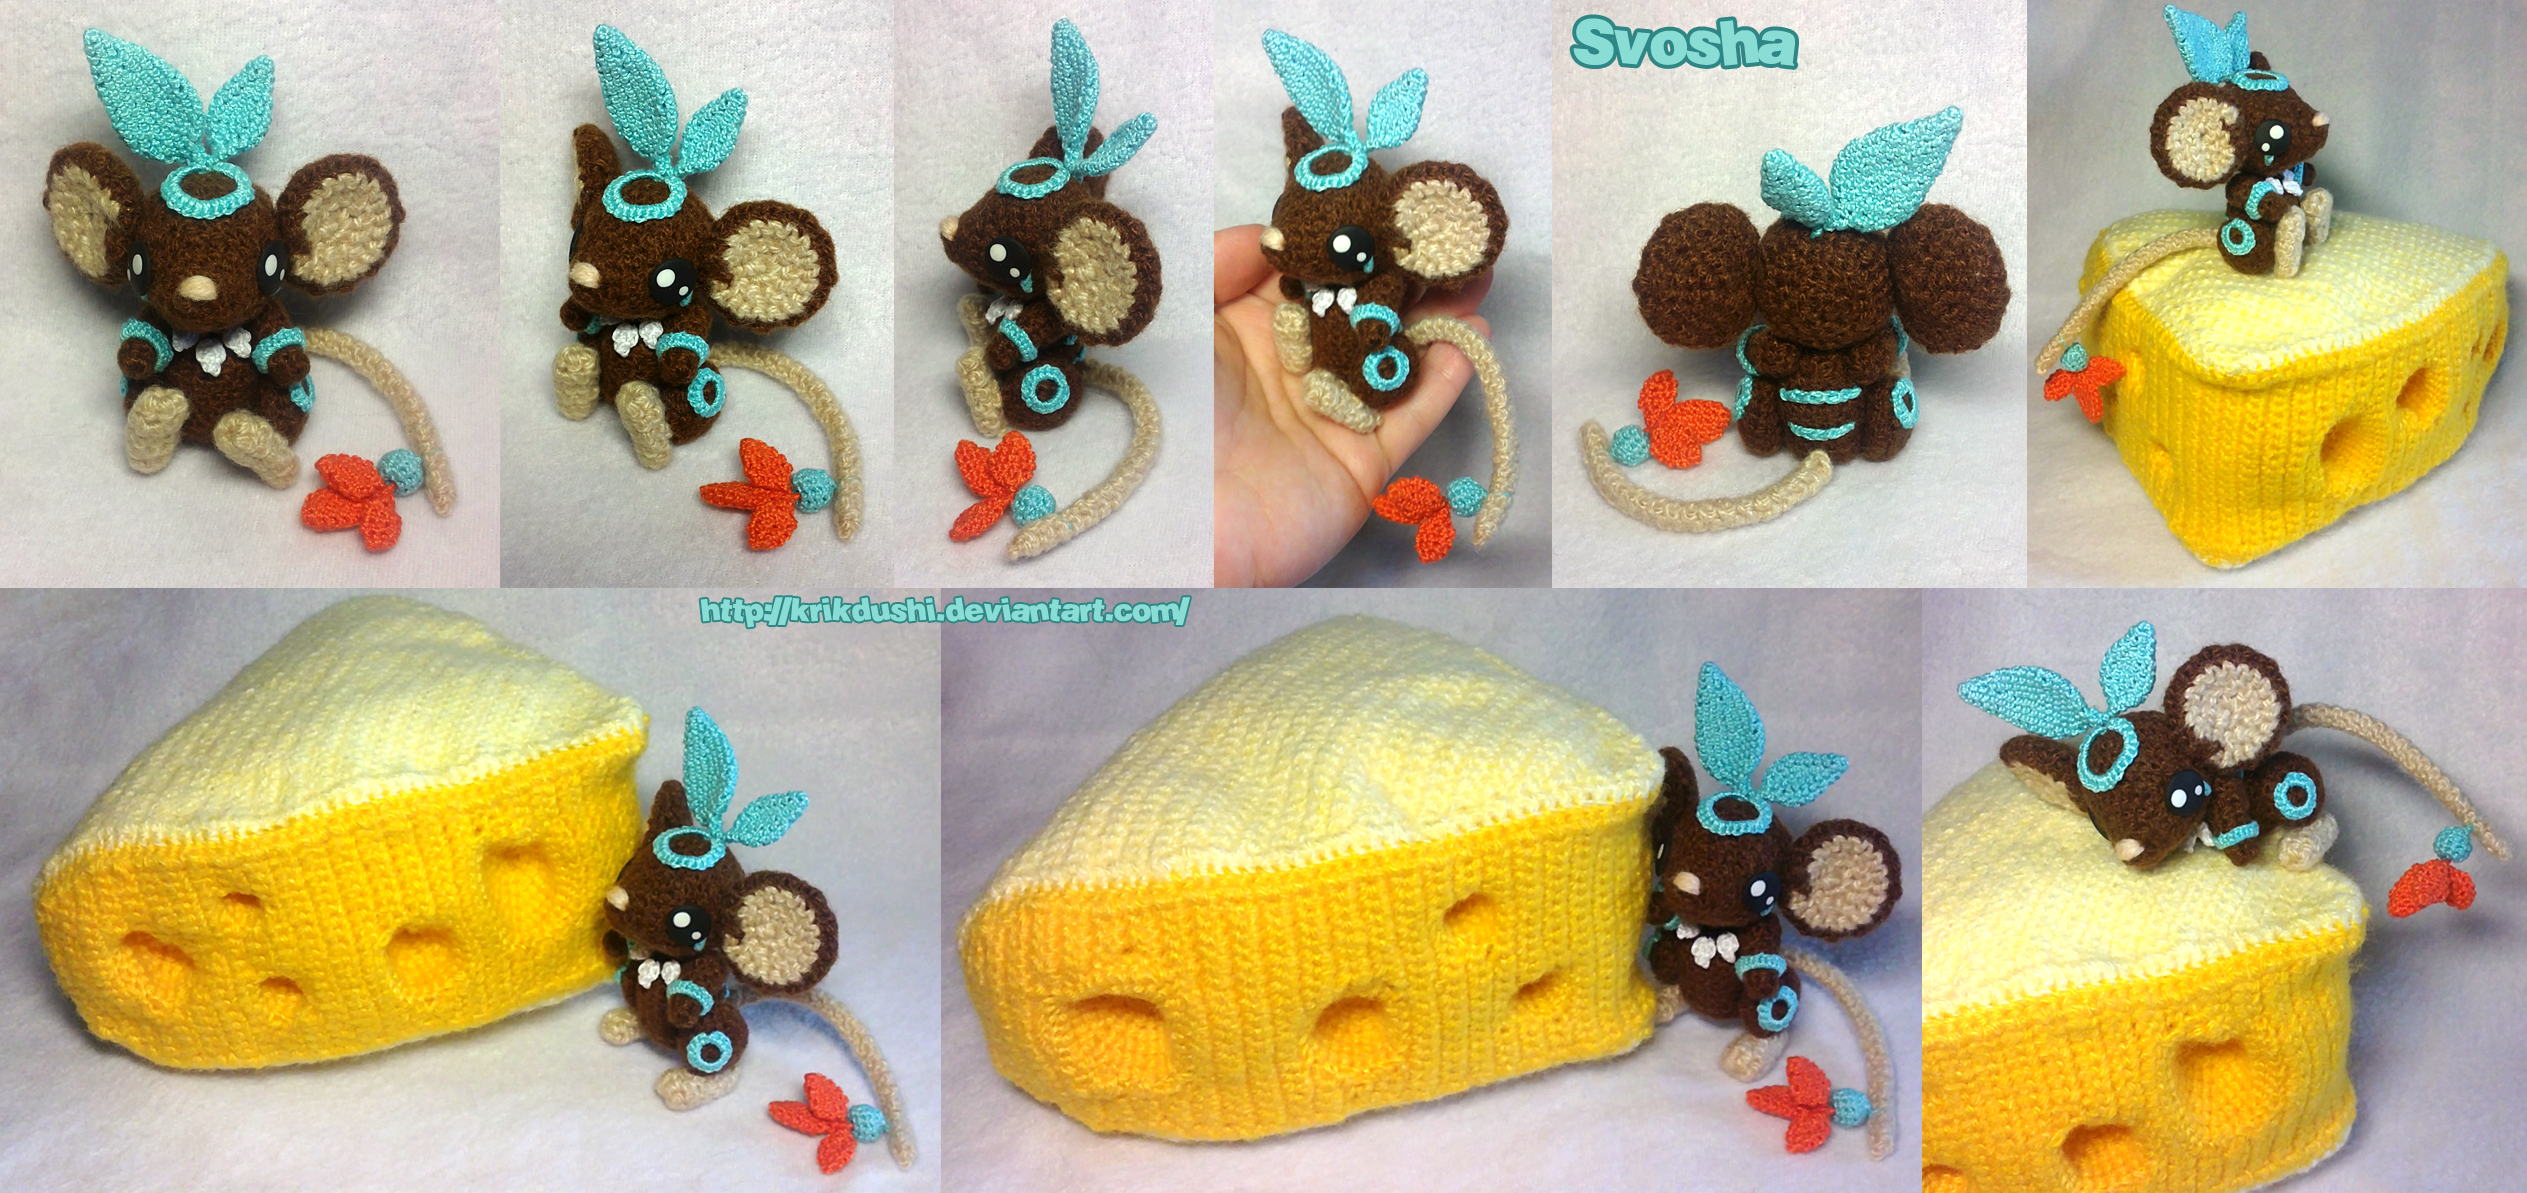 Charmander crochet stuffed animal by Tithoyie on DeviantArt